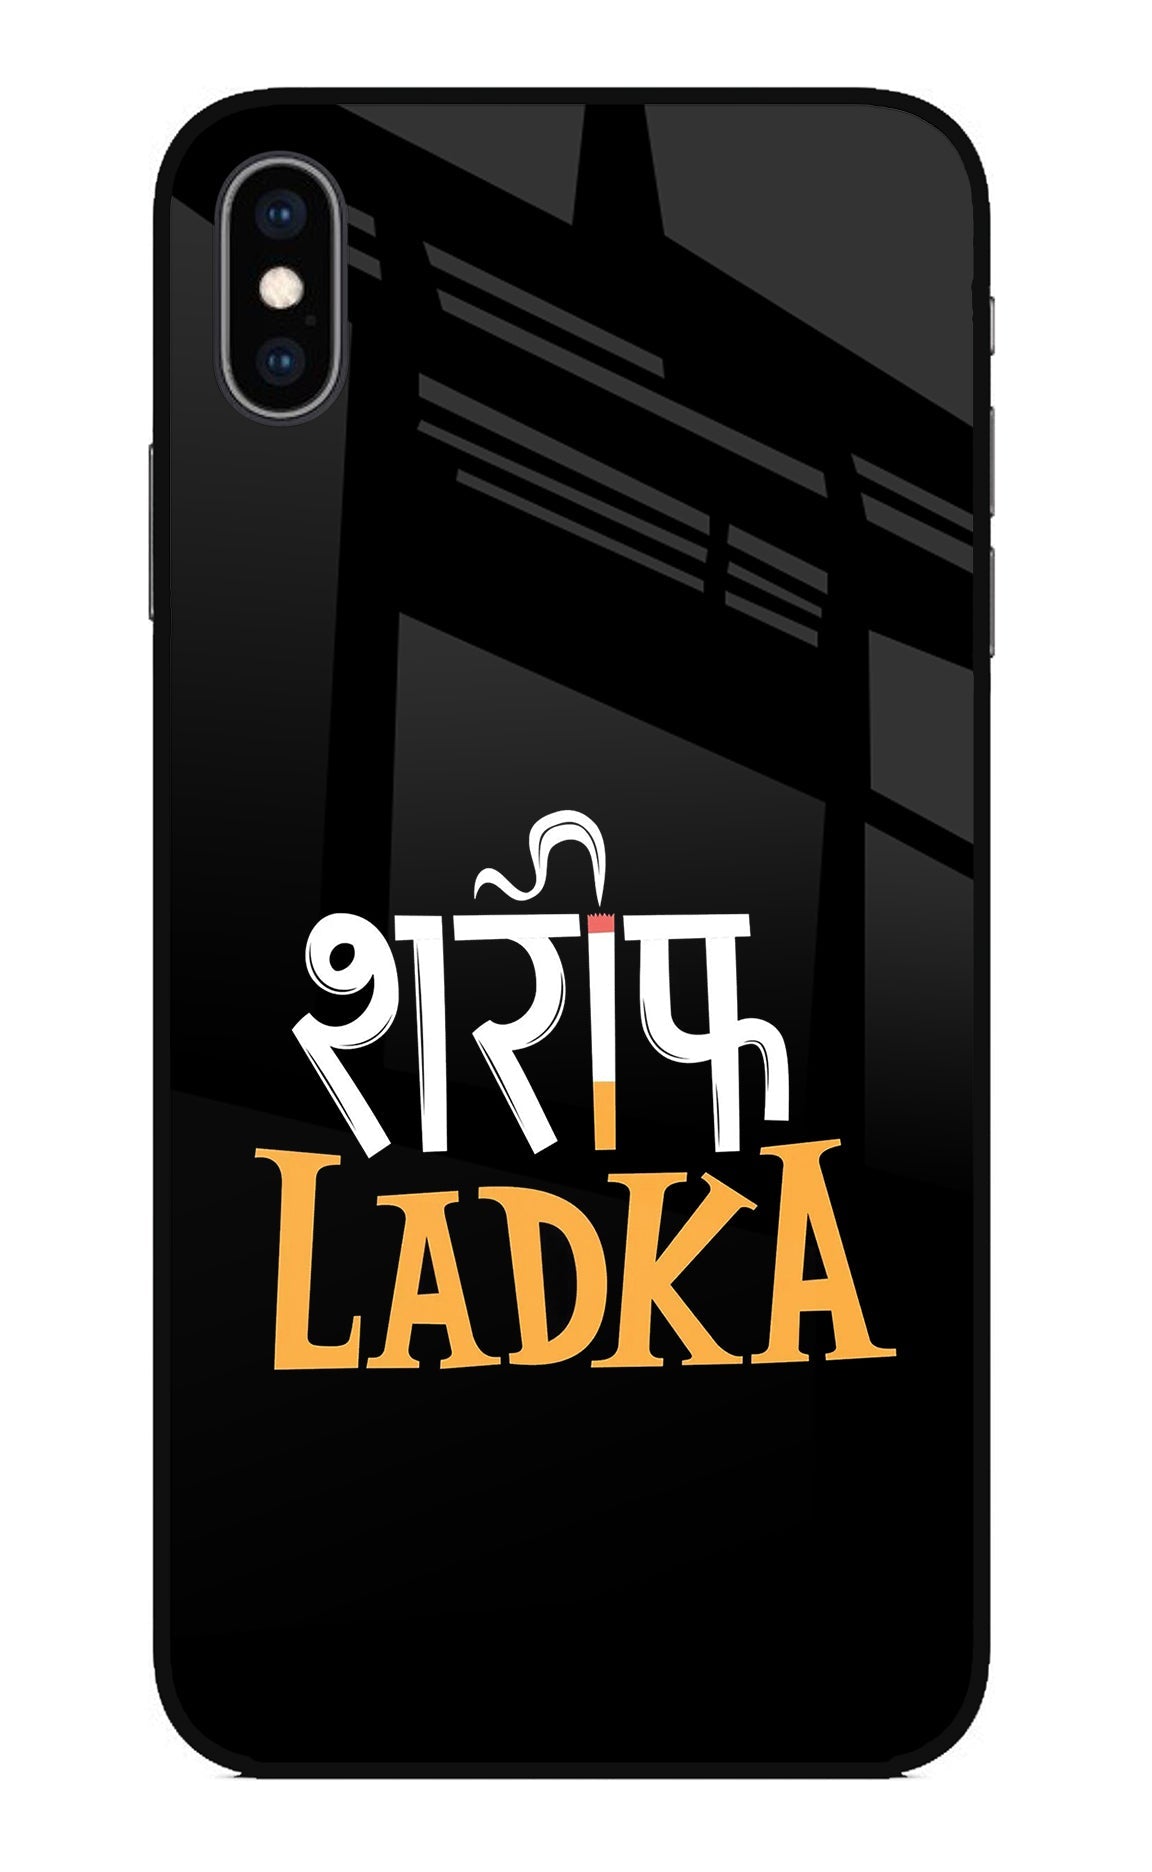 Shareef Ladka iPhone XS Max Glass Case